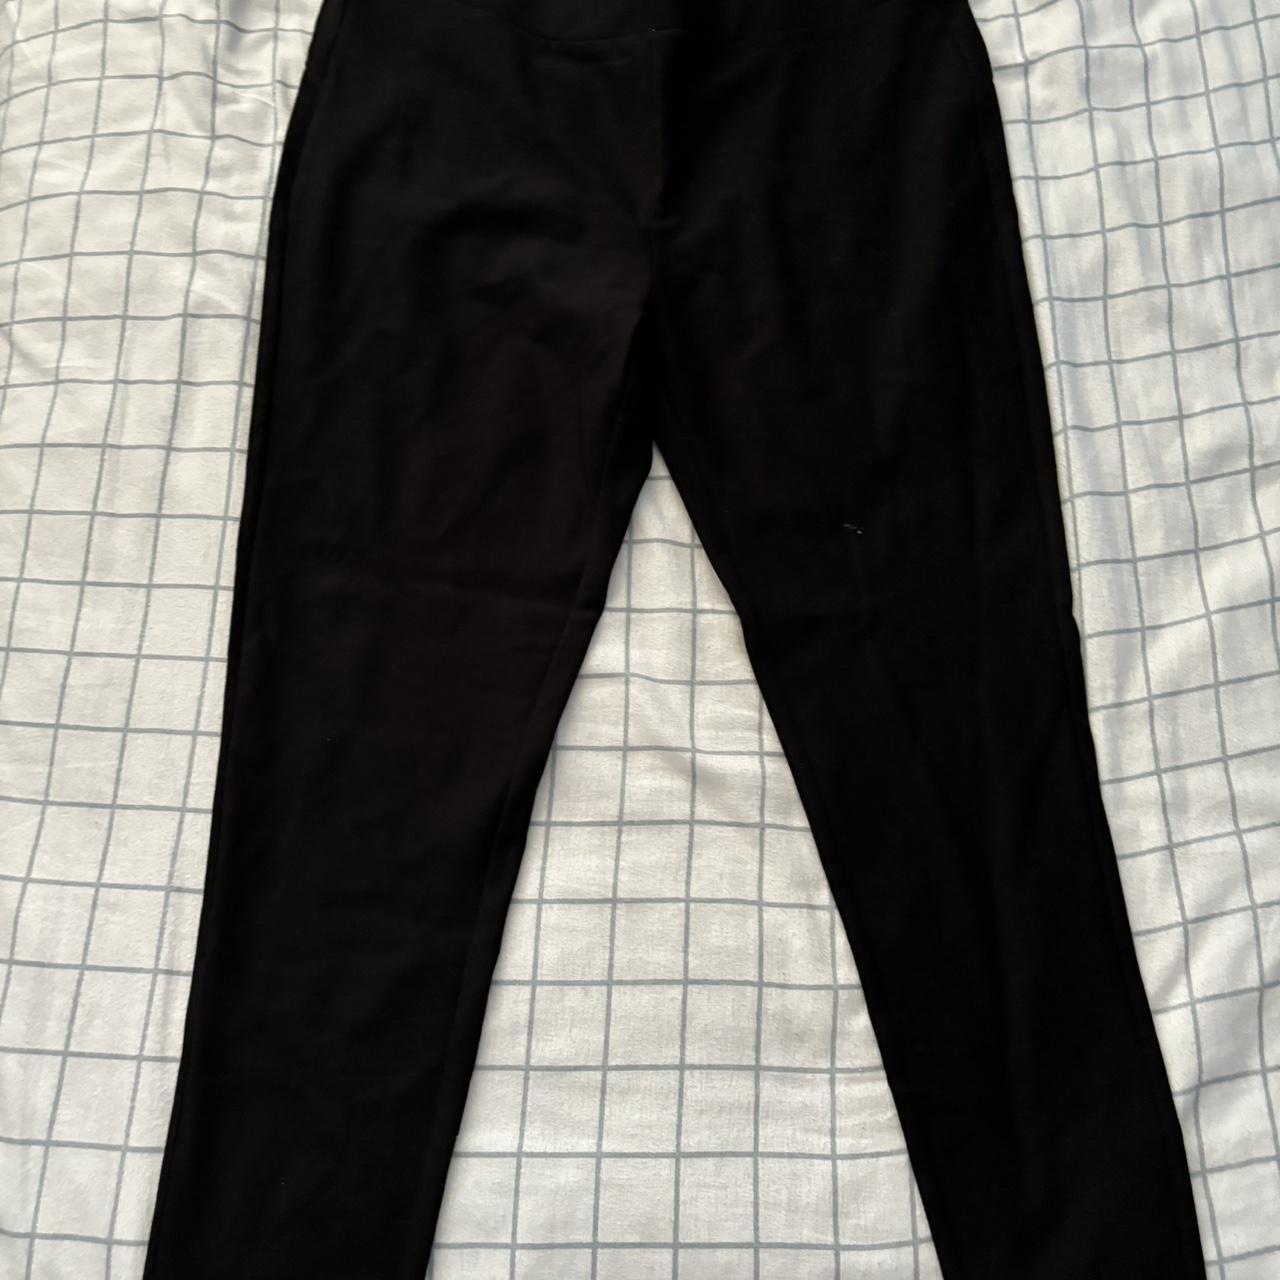 Plain black leggings size large - Depop